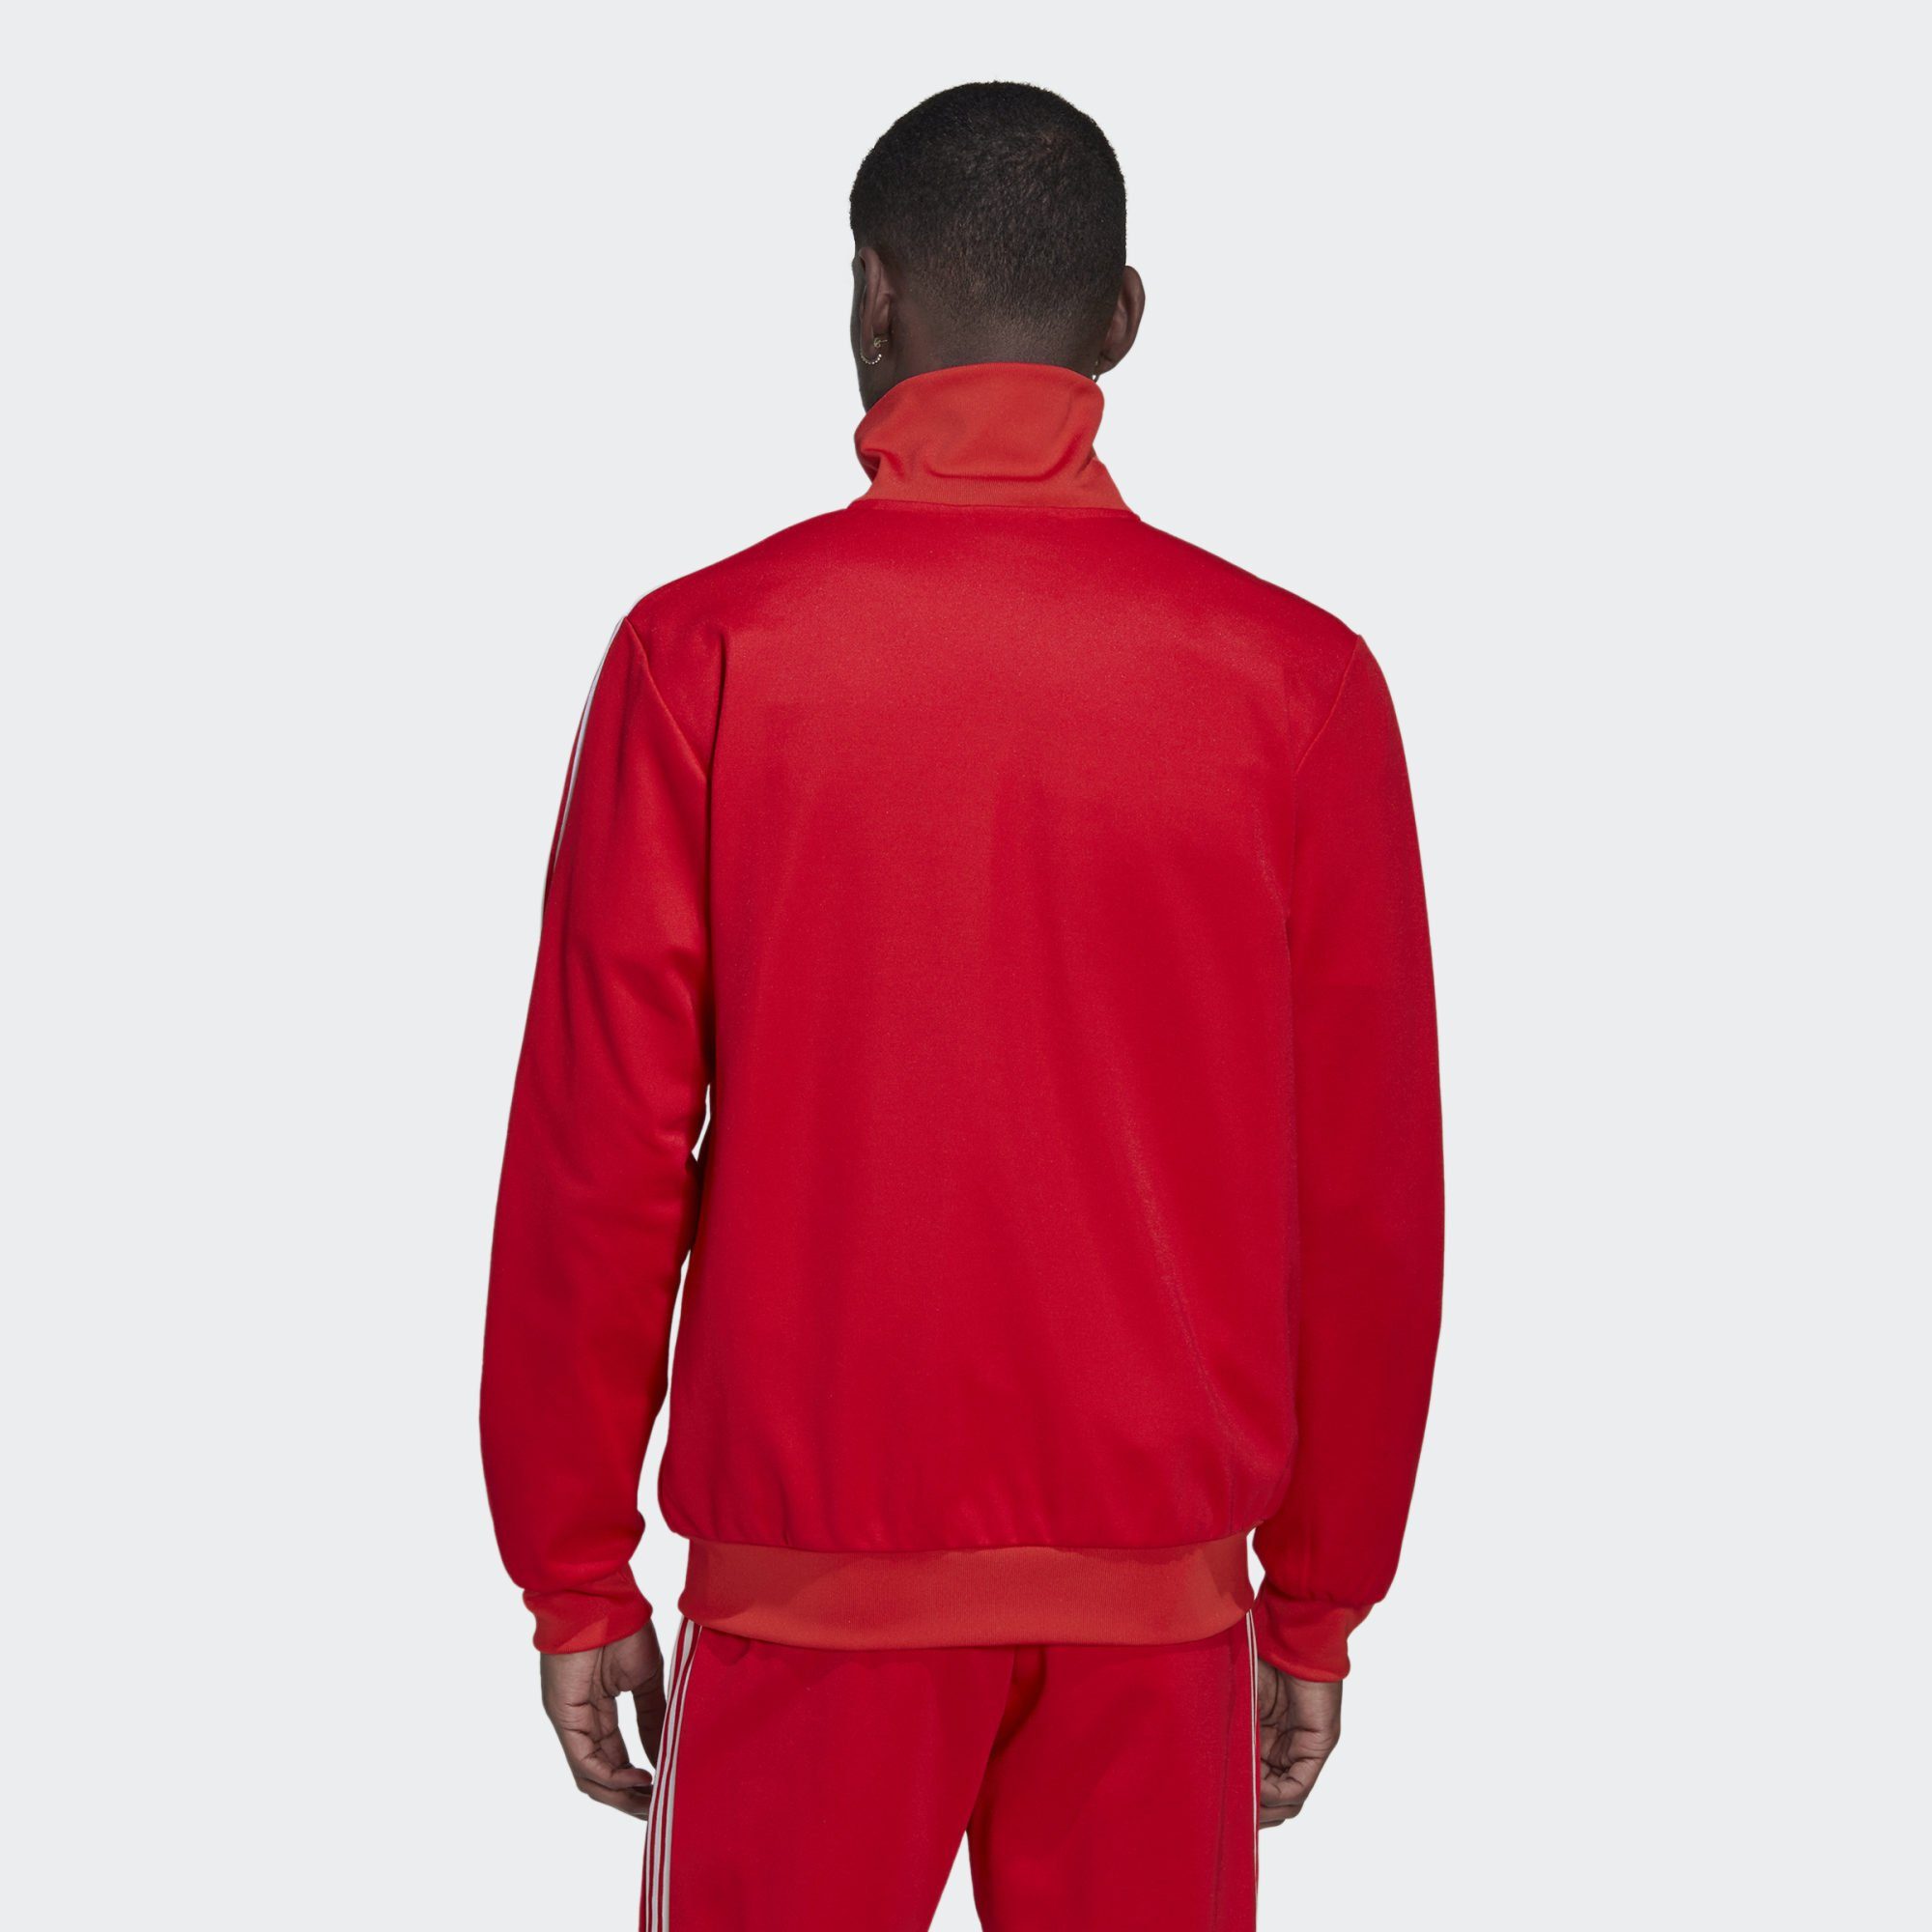 Vivid adidas S21 Red Originals Trainingsjacke